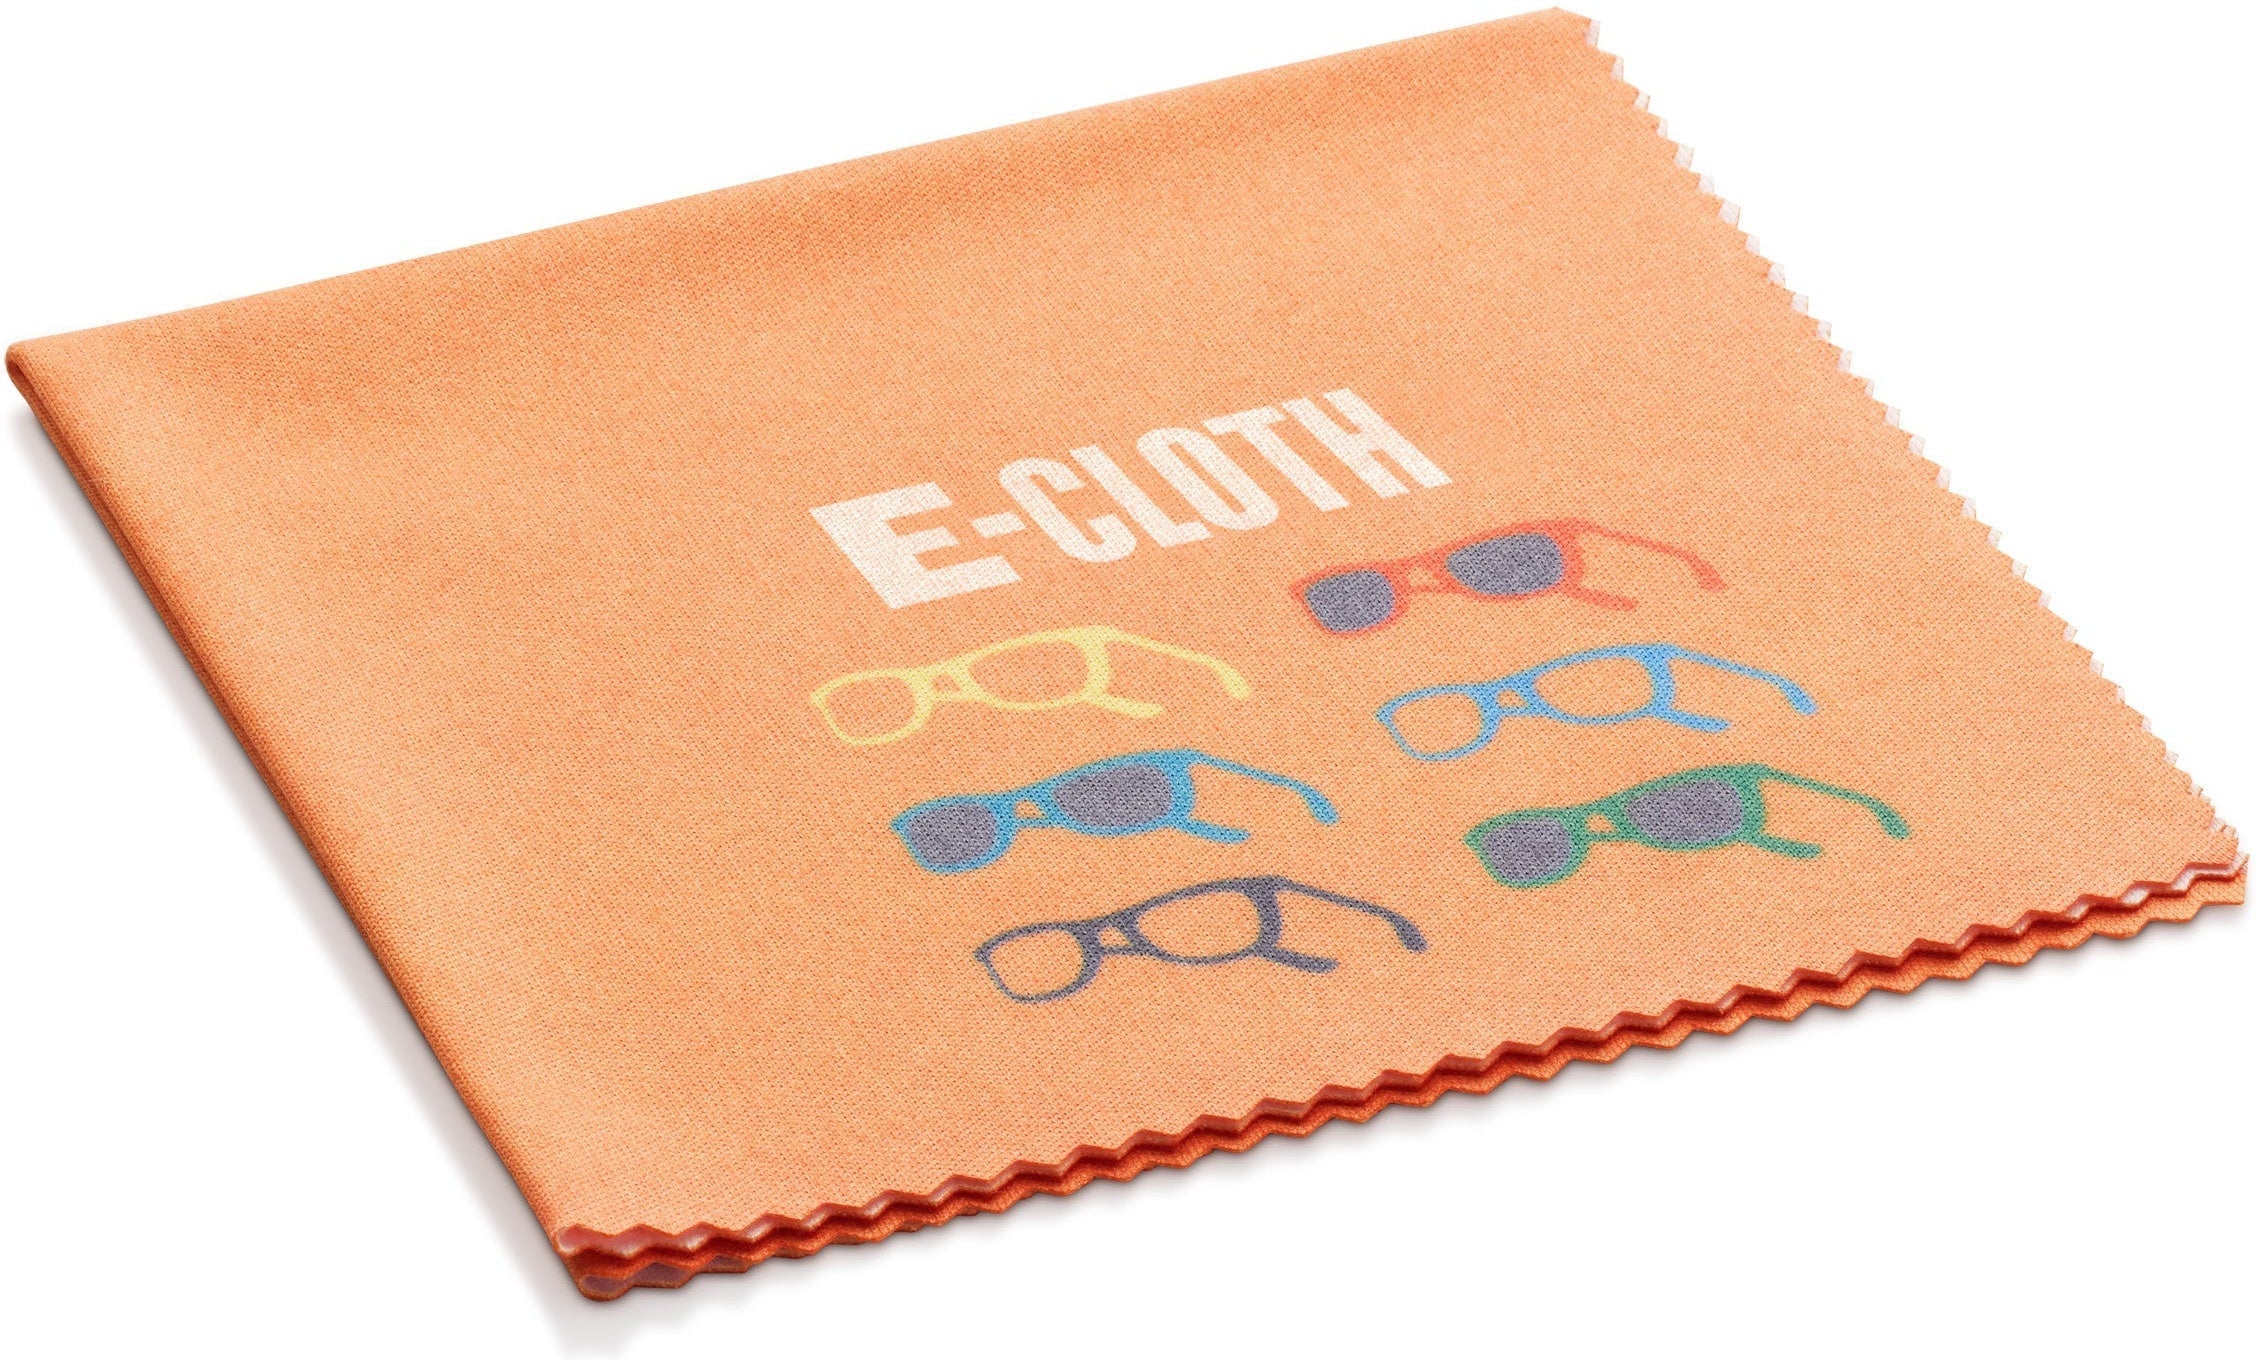 E-Cloth - Eye Glasses Cloth - EGLC